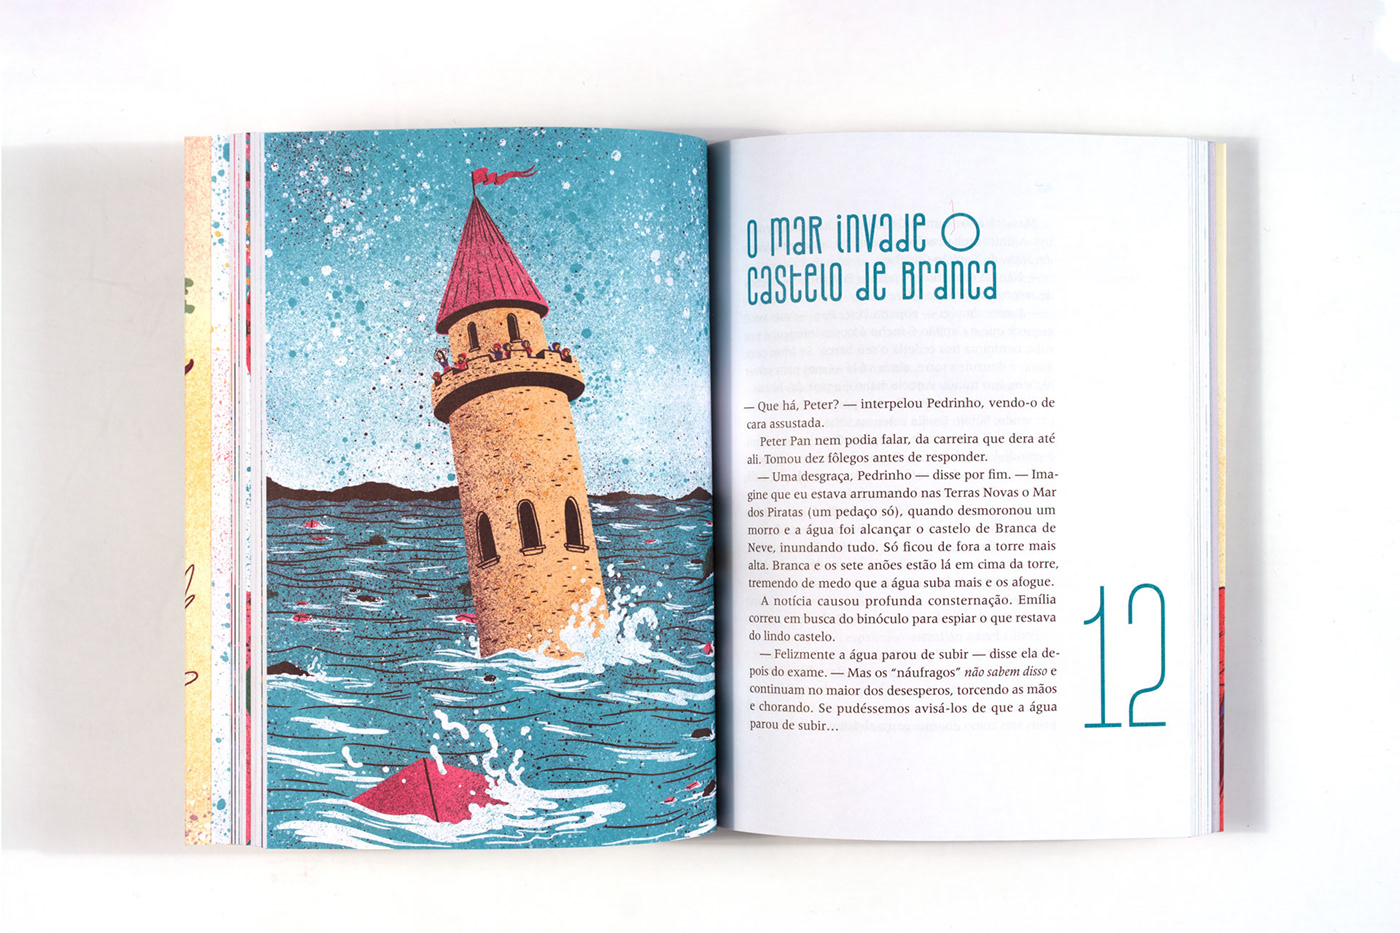 monteiro lobato children book Livro book infantil fairytales kidlit literature